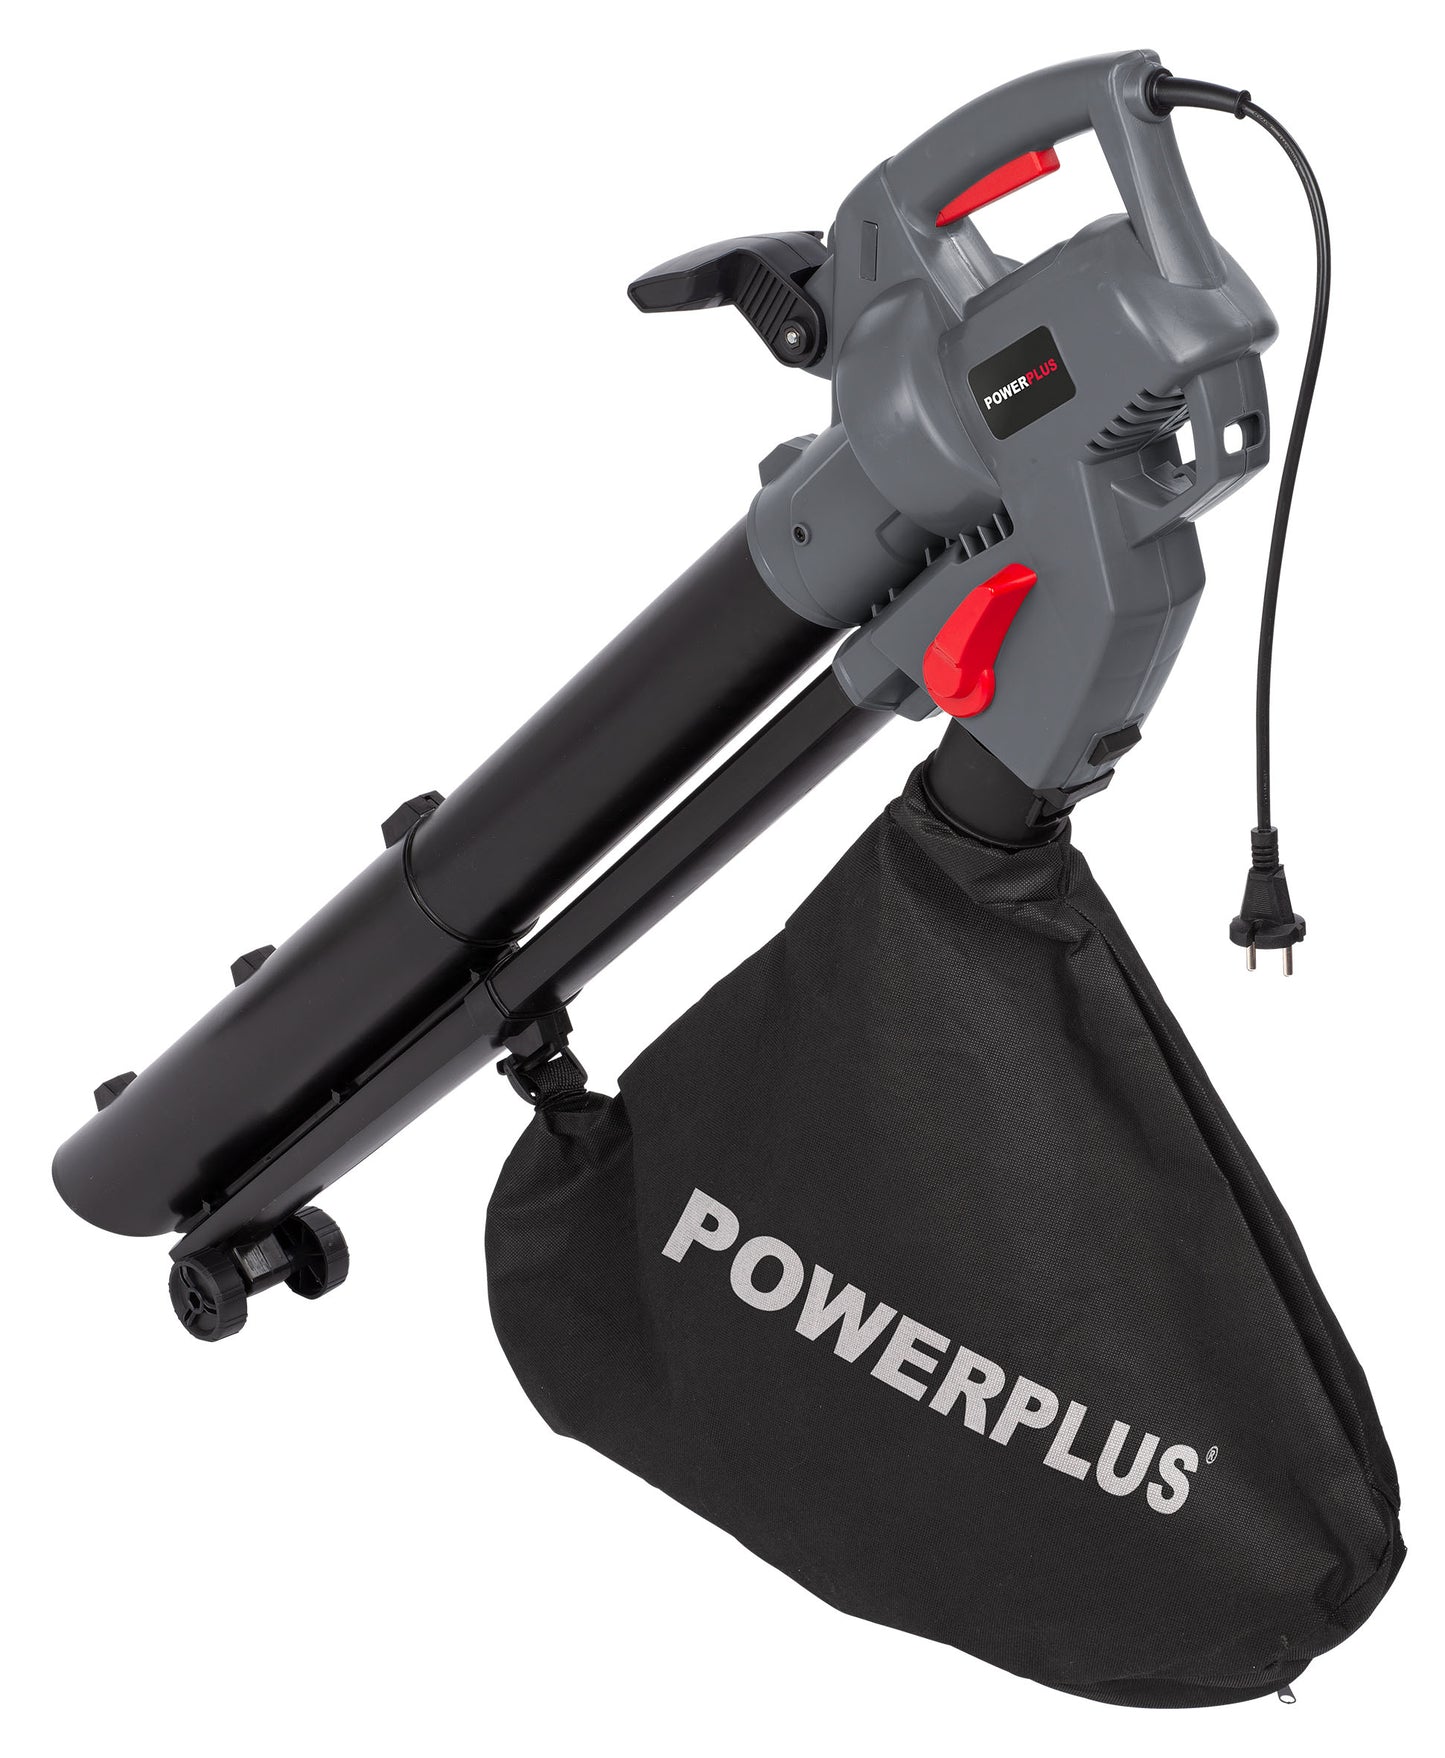 Power Plus - 3300w Leaf Blower and Vacuum - Grey